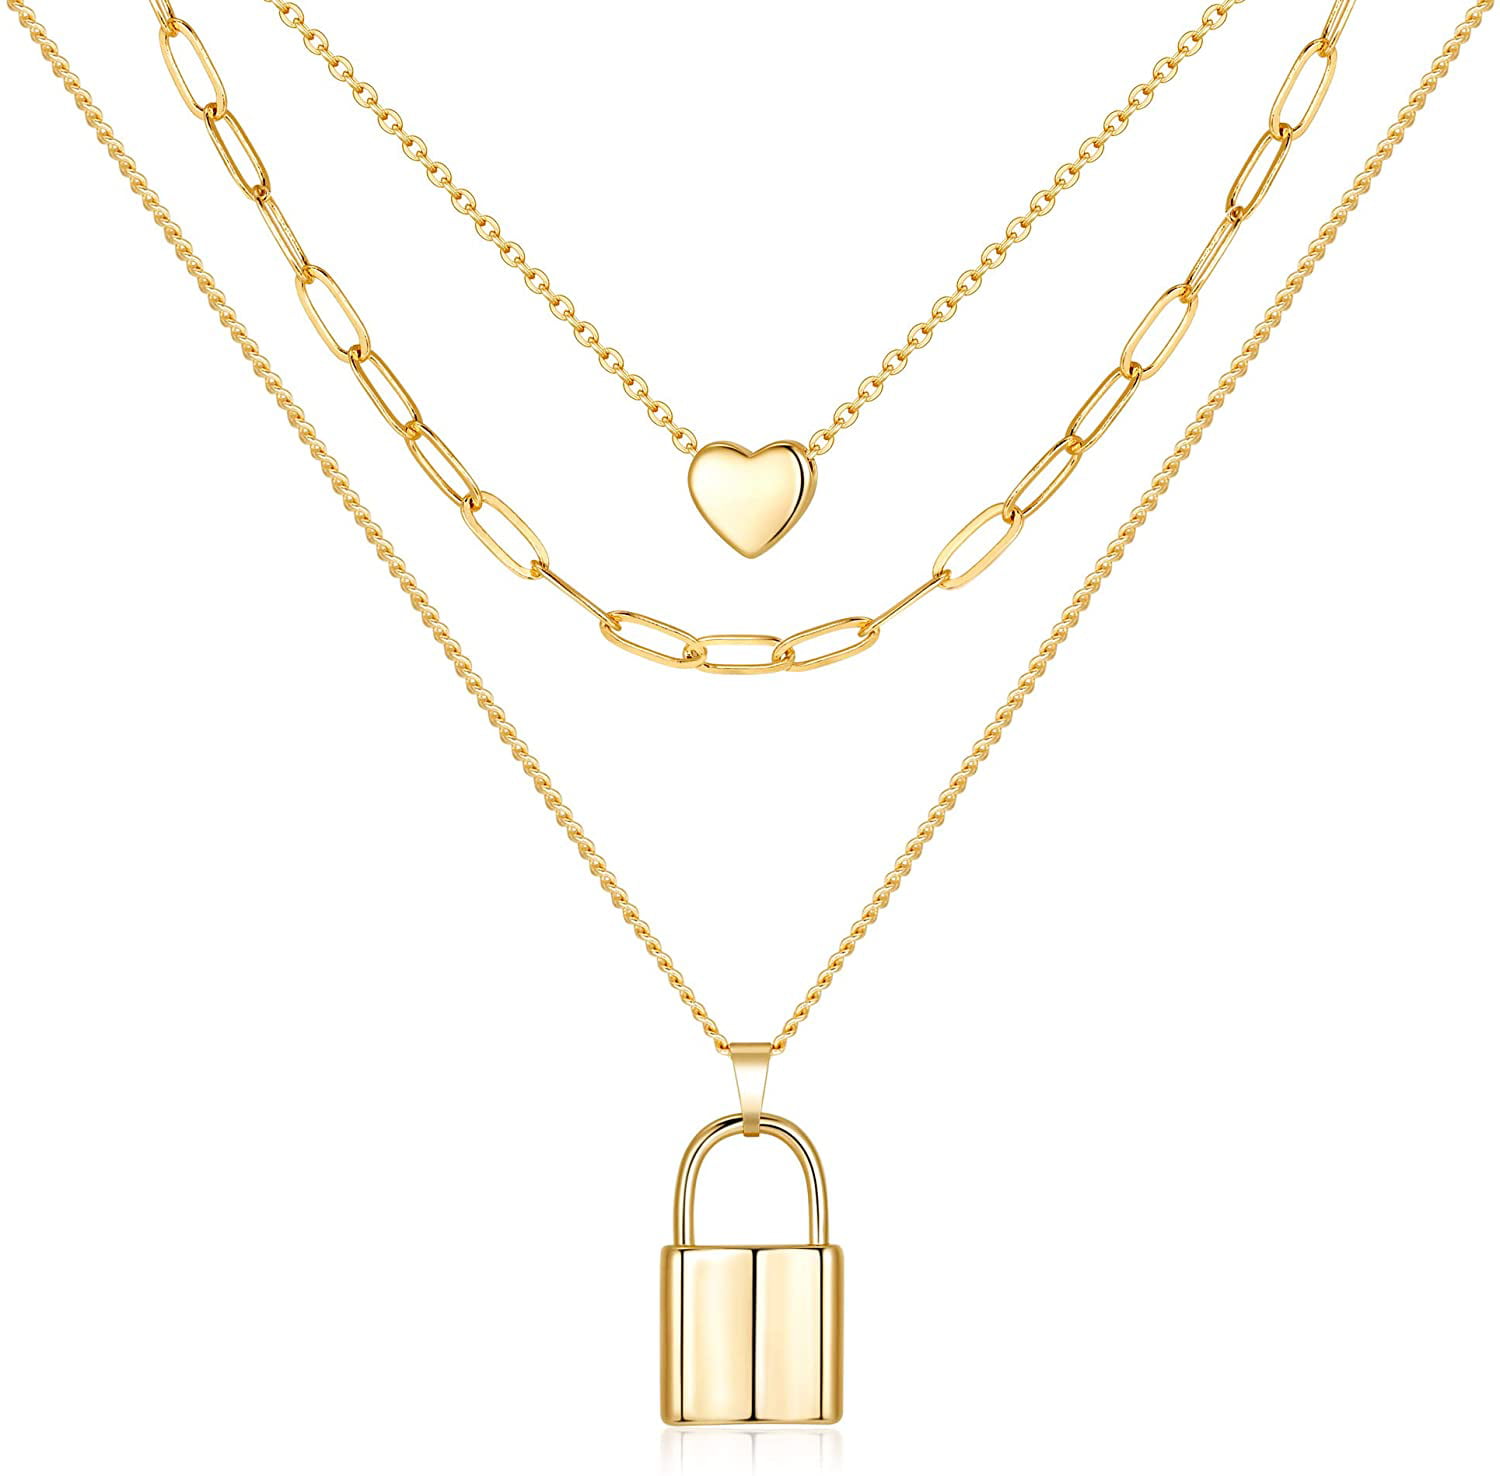 Lock Necklace for Women 14K Gold Filled Padlock Lock Pendant Chain